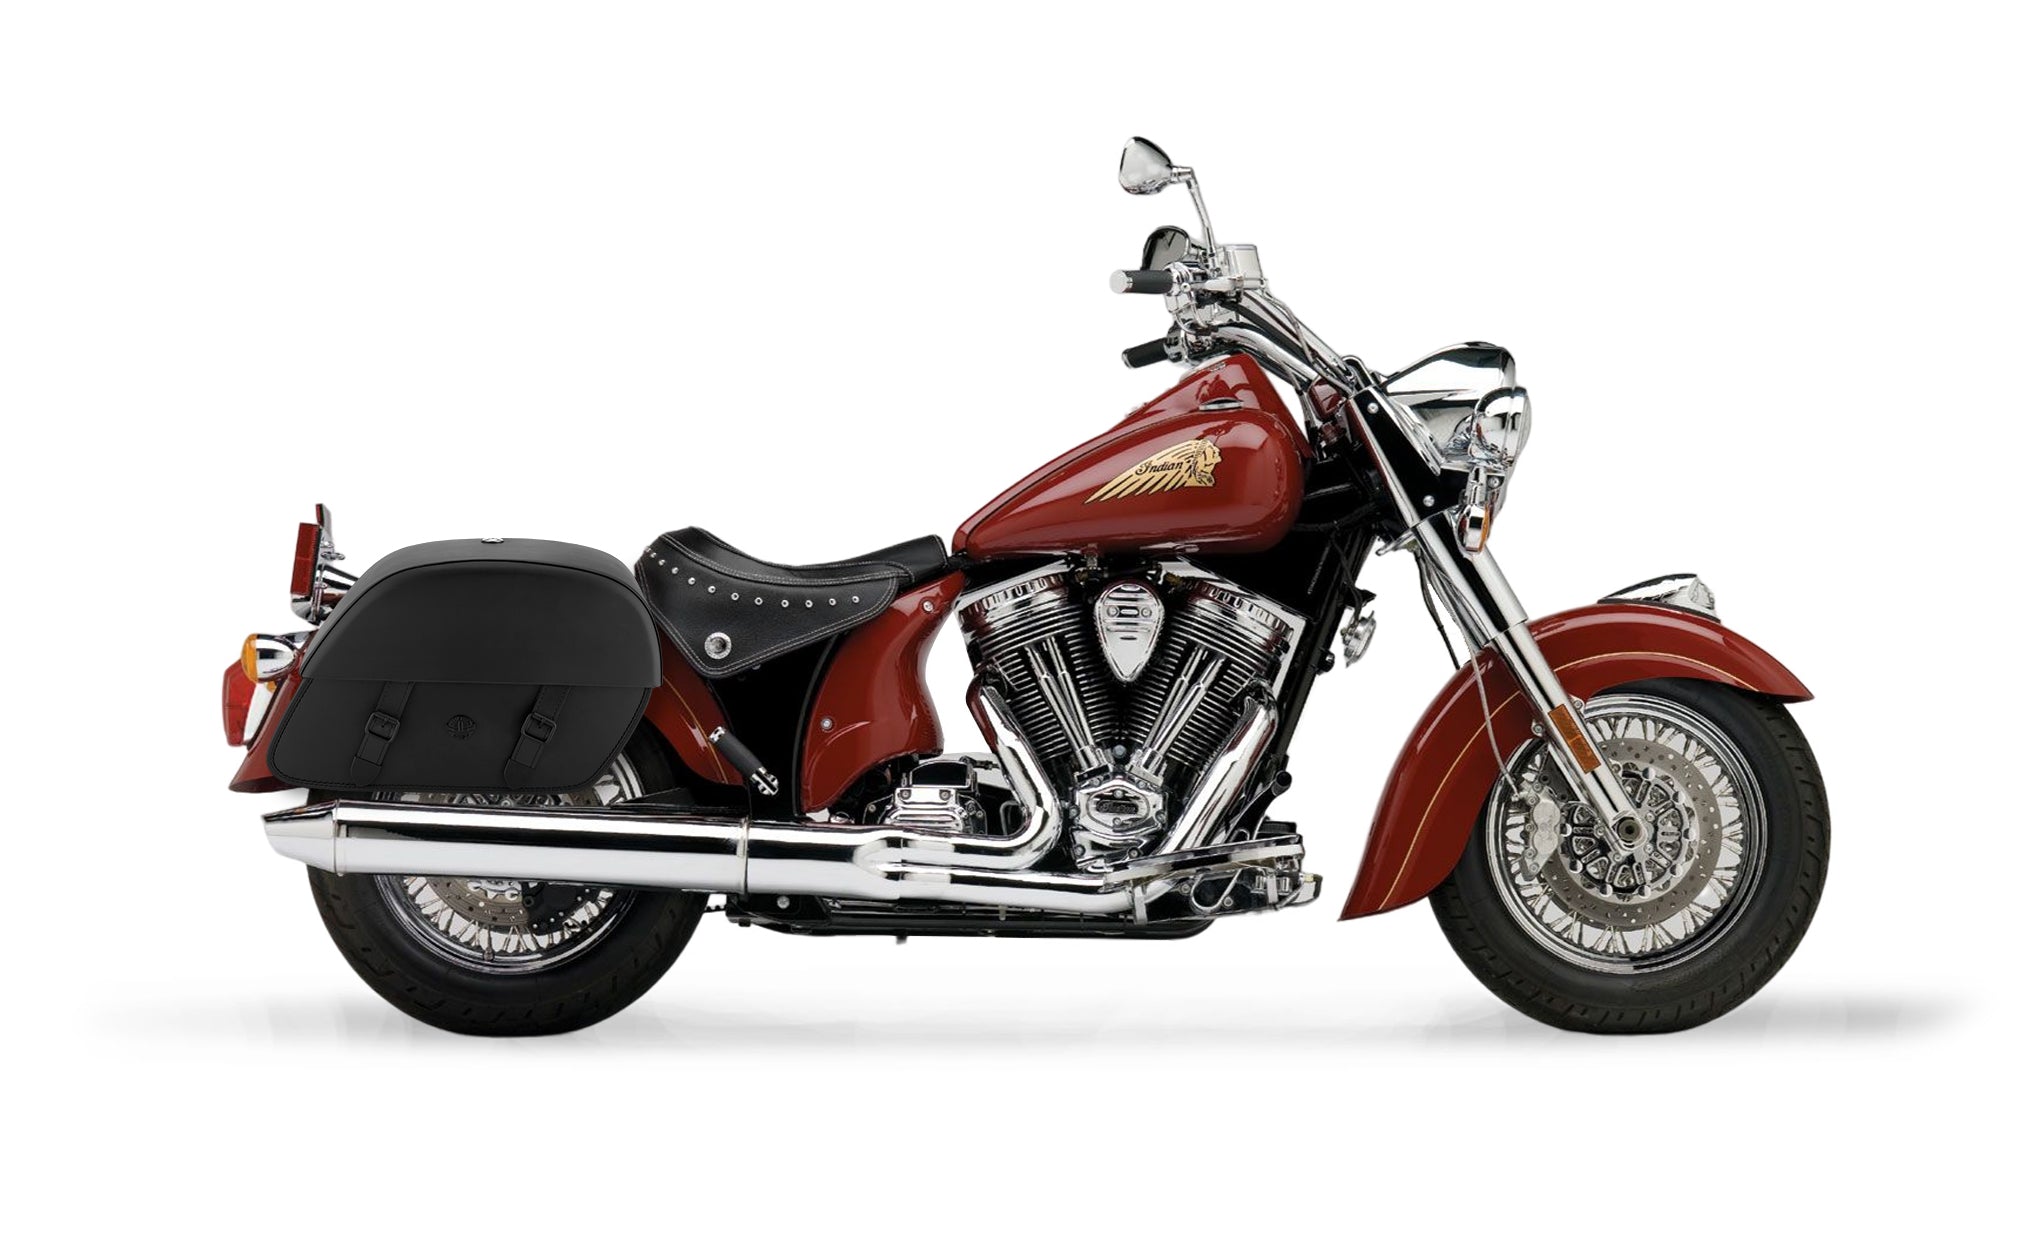 Viking Baelor Large Indian Chief Standard Leather Motorcycle Saddlebags on Bike Photo @expand